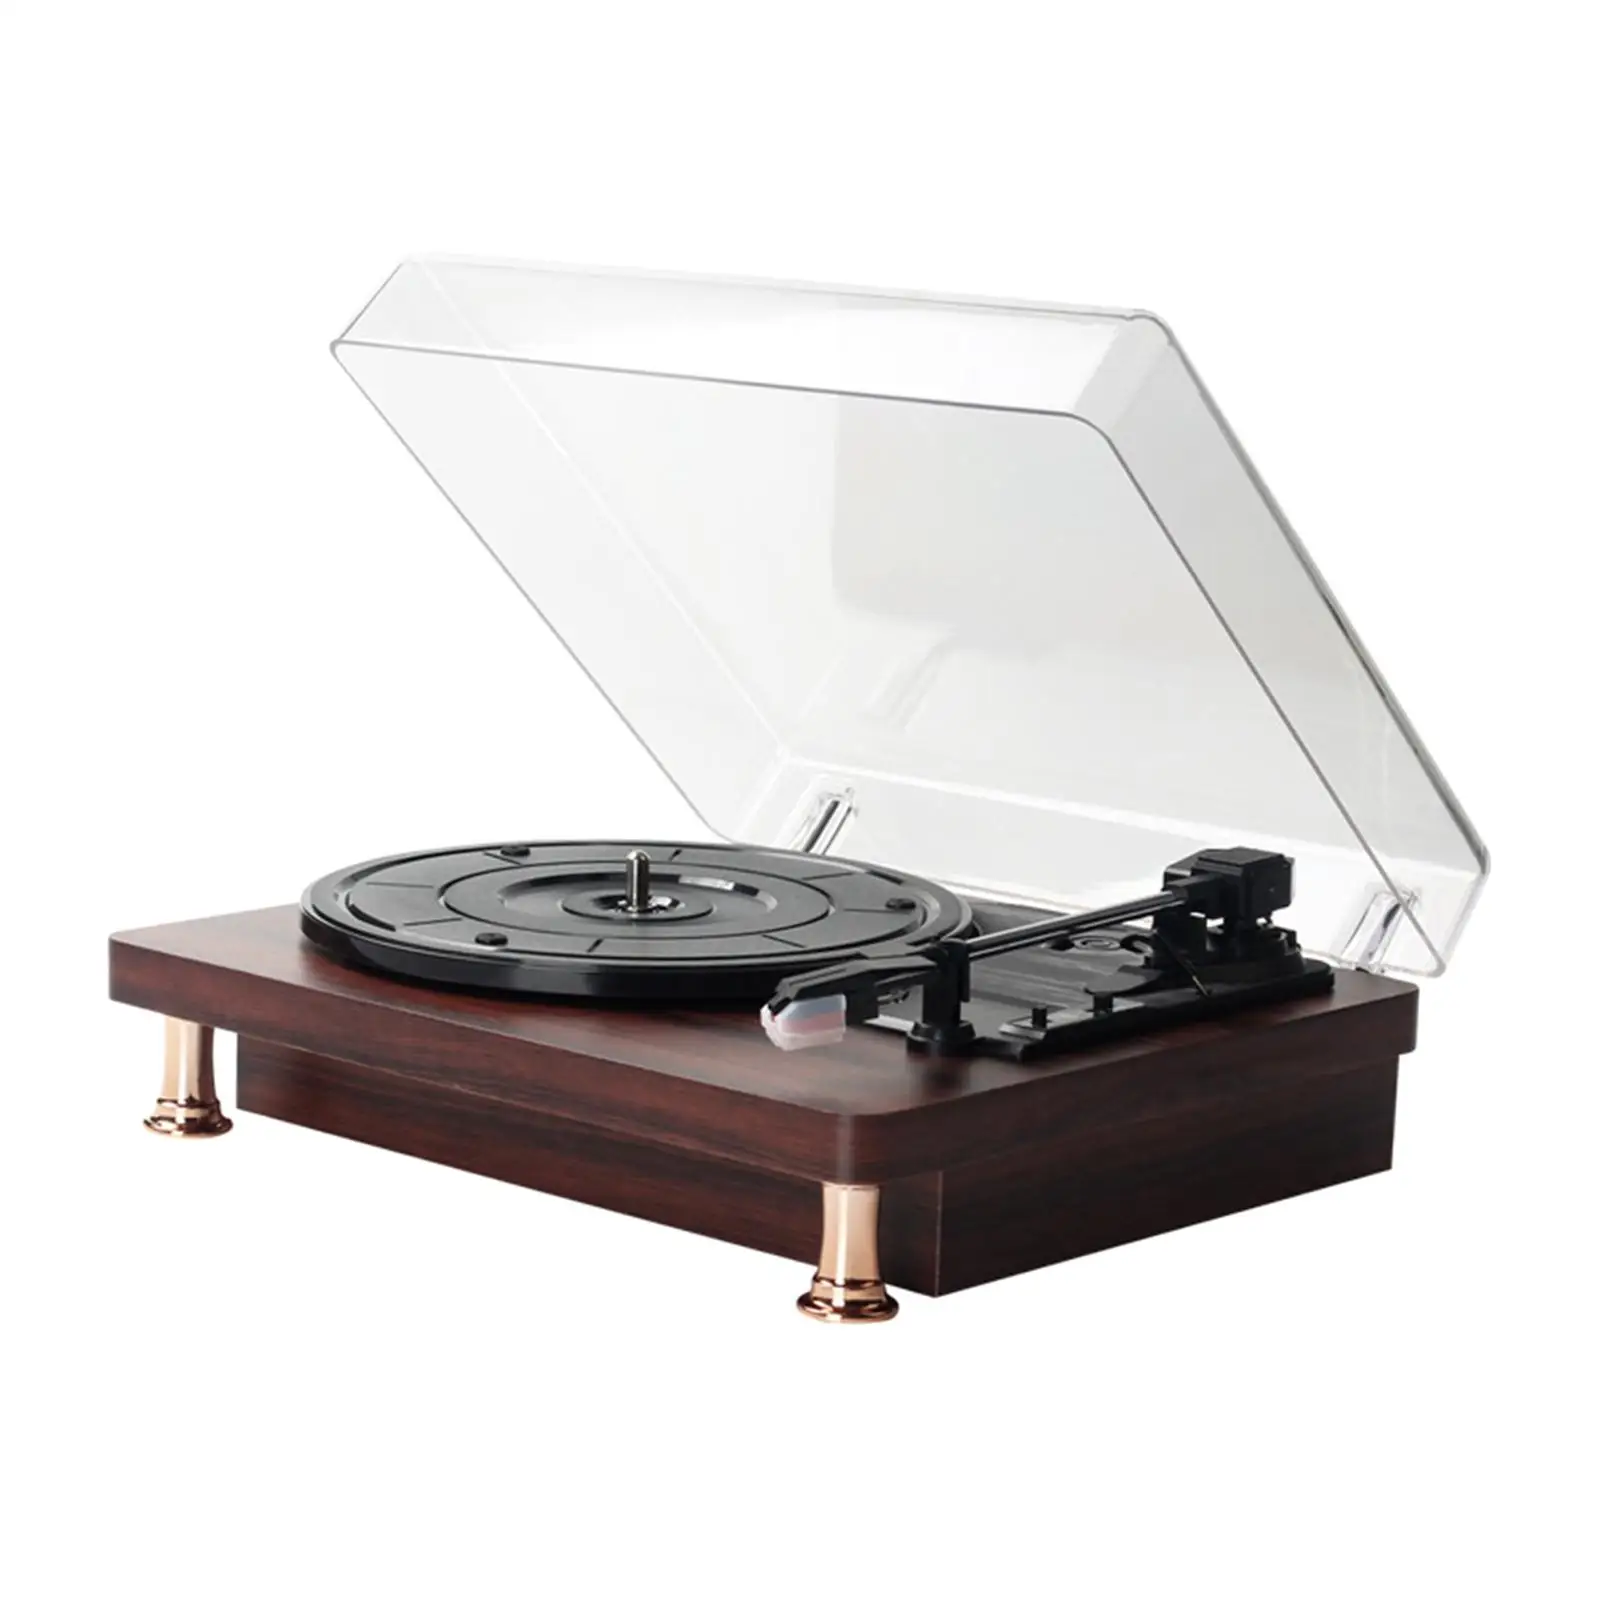 Retro Style Vinyl Record Player Turntable 3 Speeds Built in Speakers Phonograph